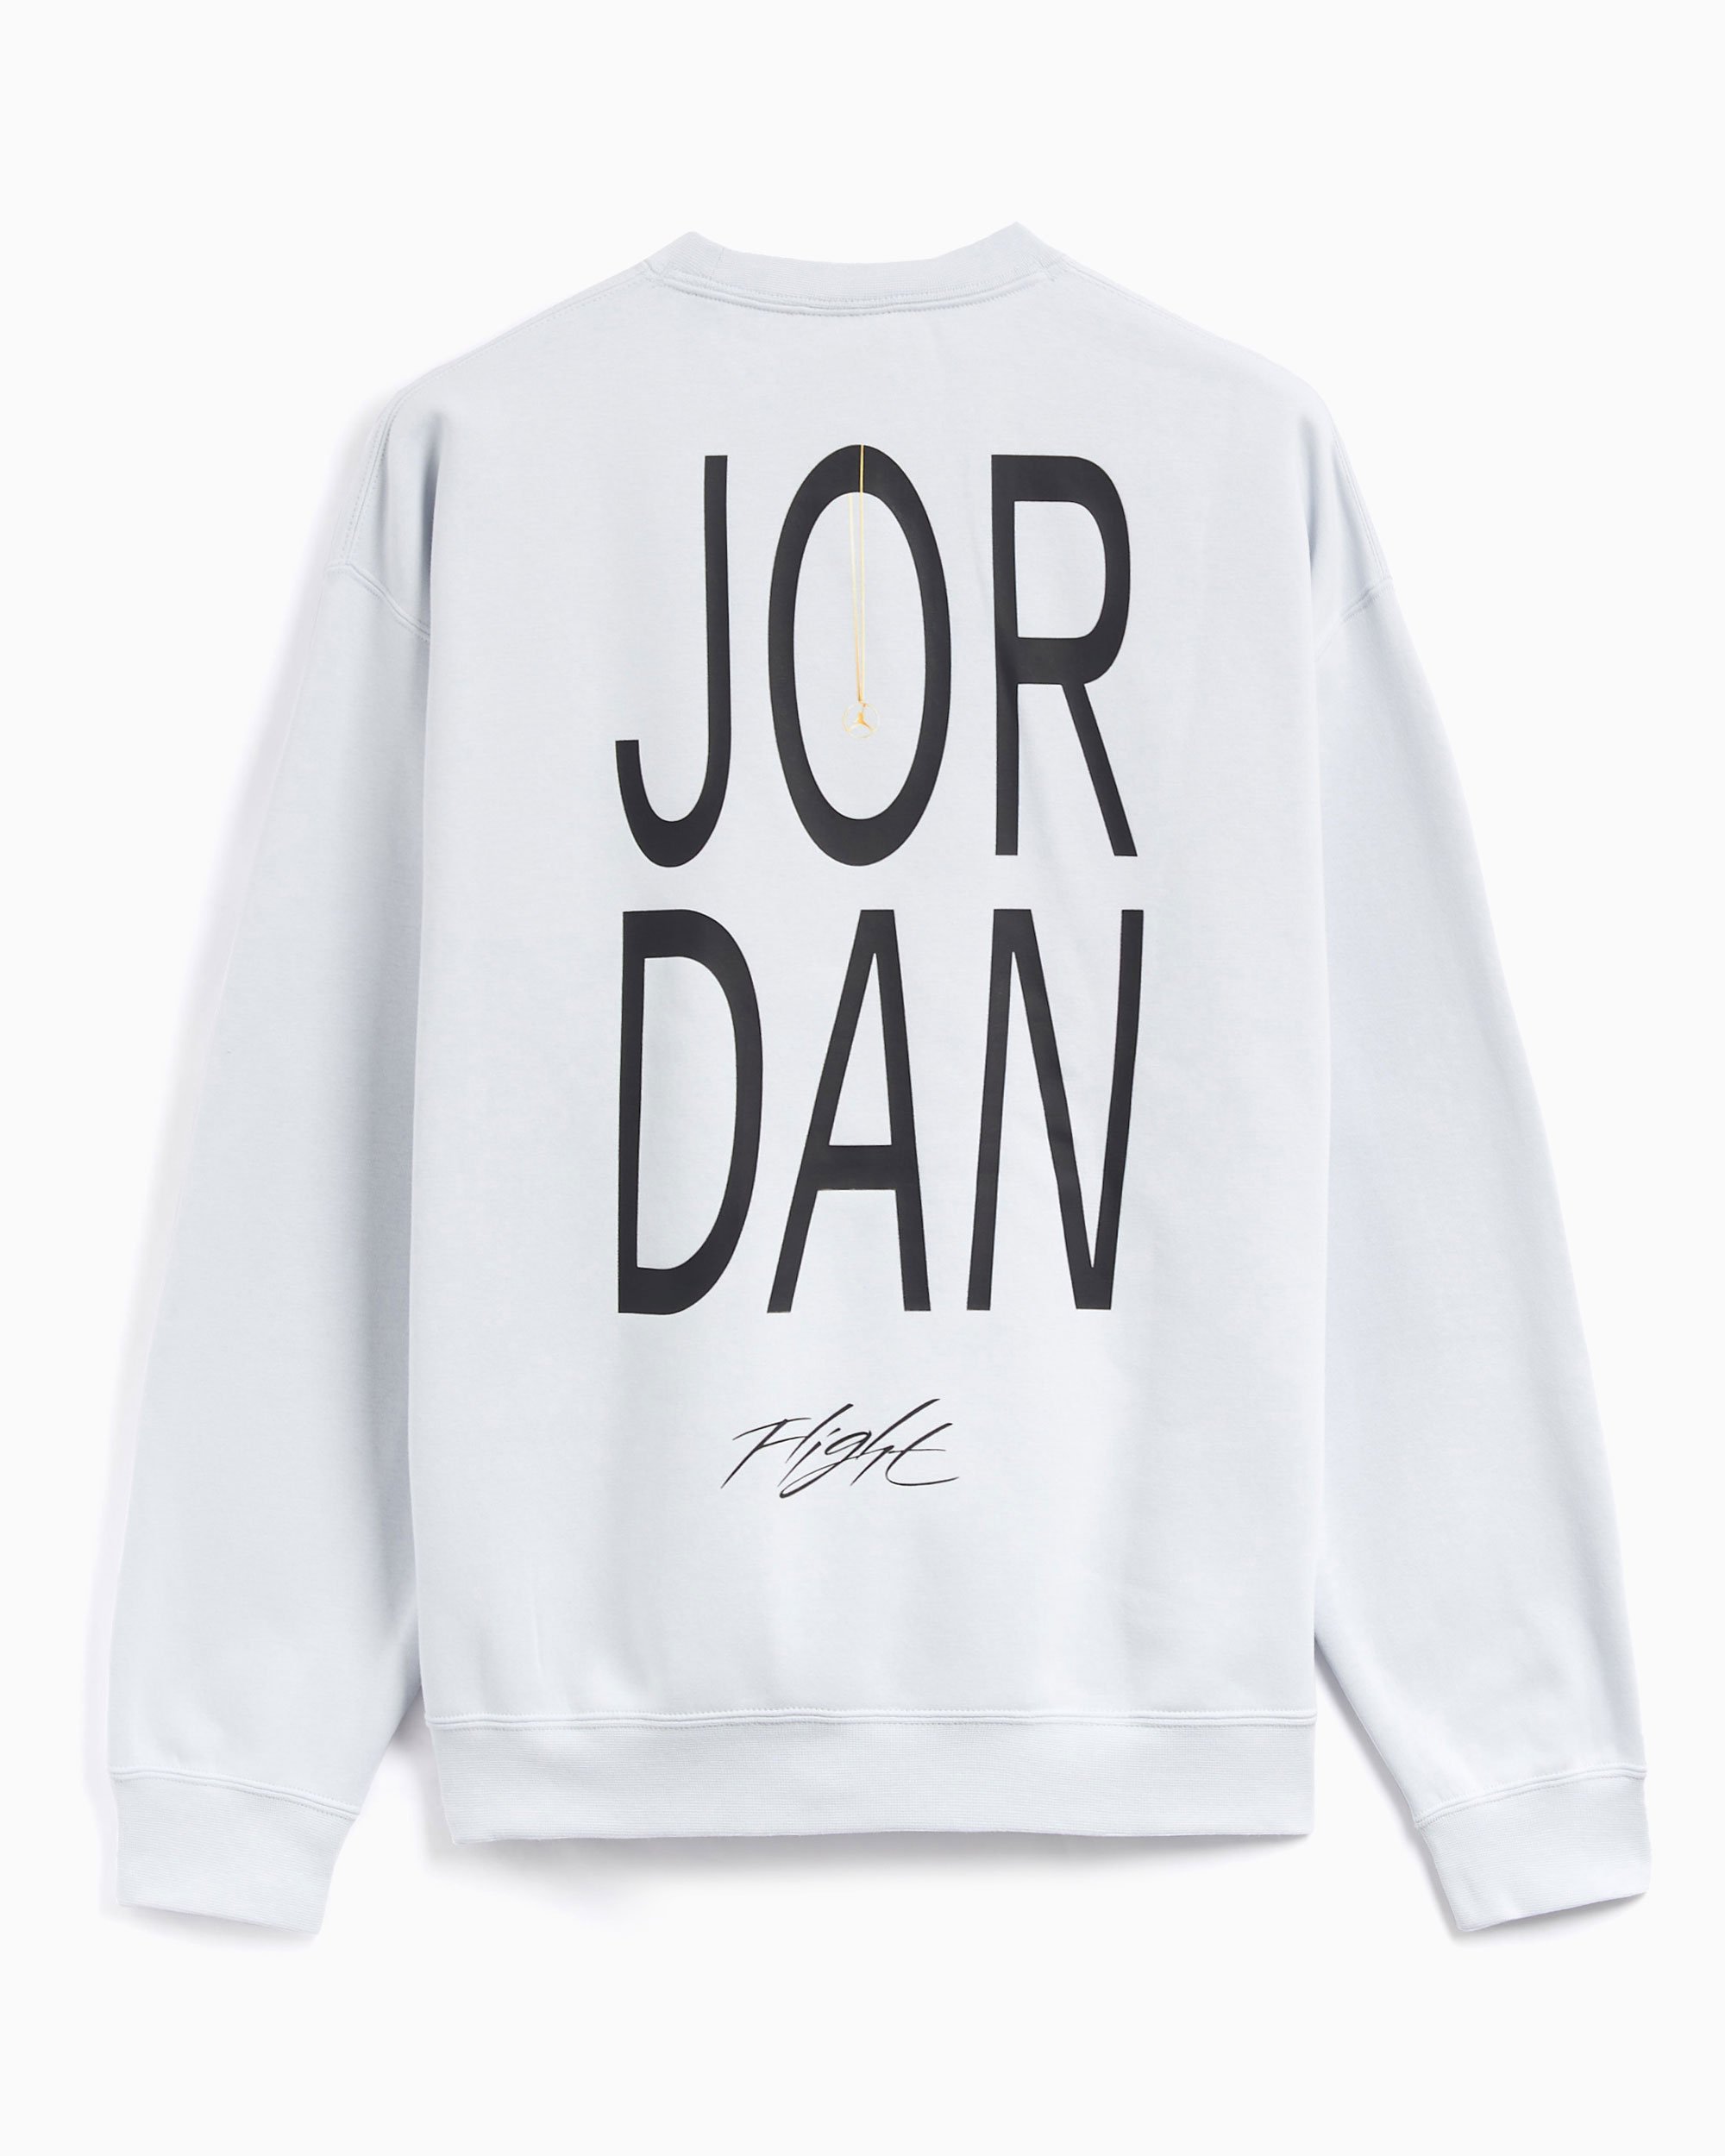 Jordan Artist Series By Darien Birks Women's Fleece Sweatshirt 